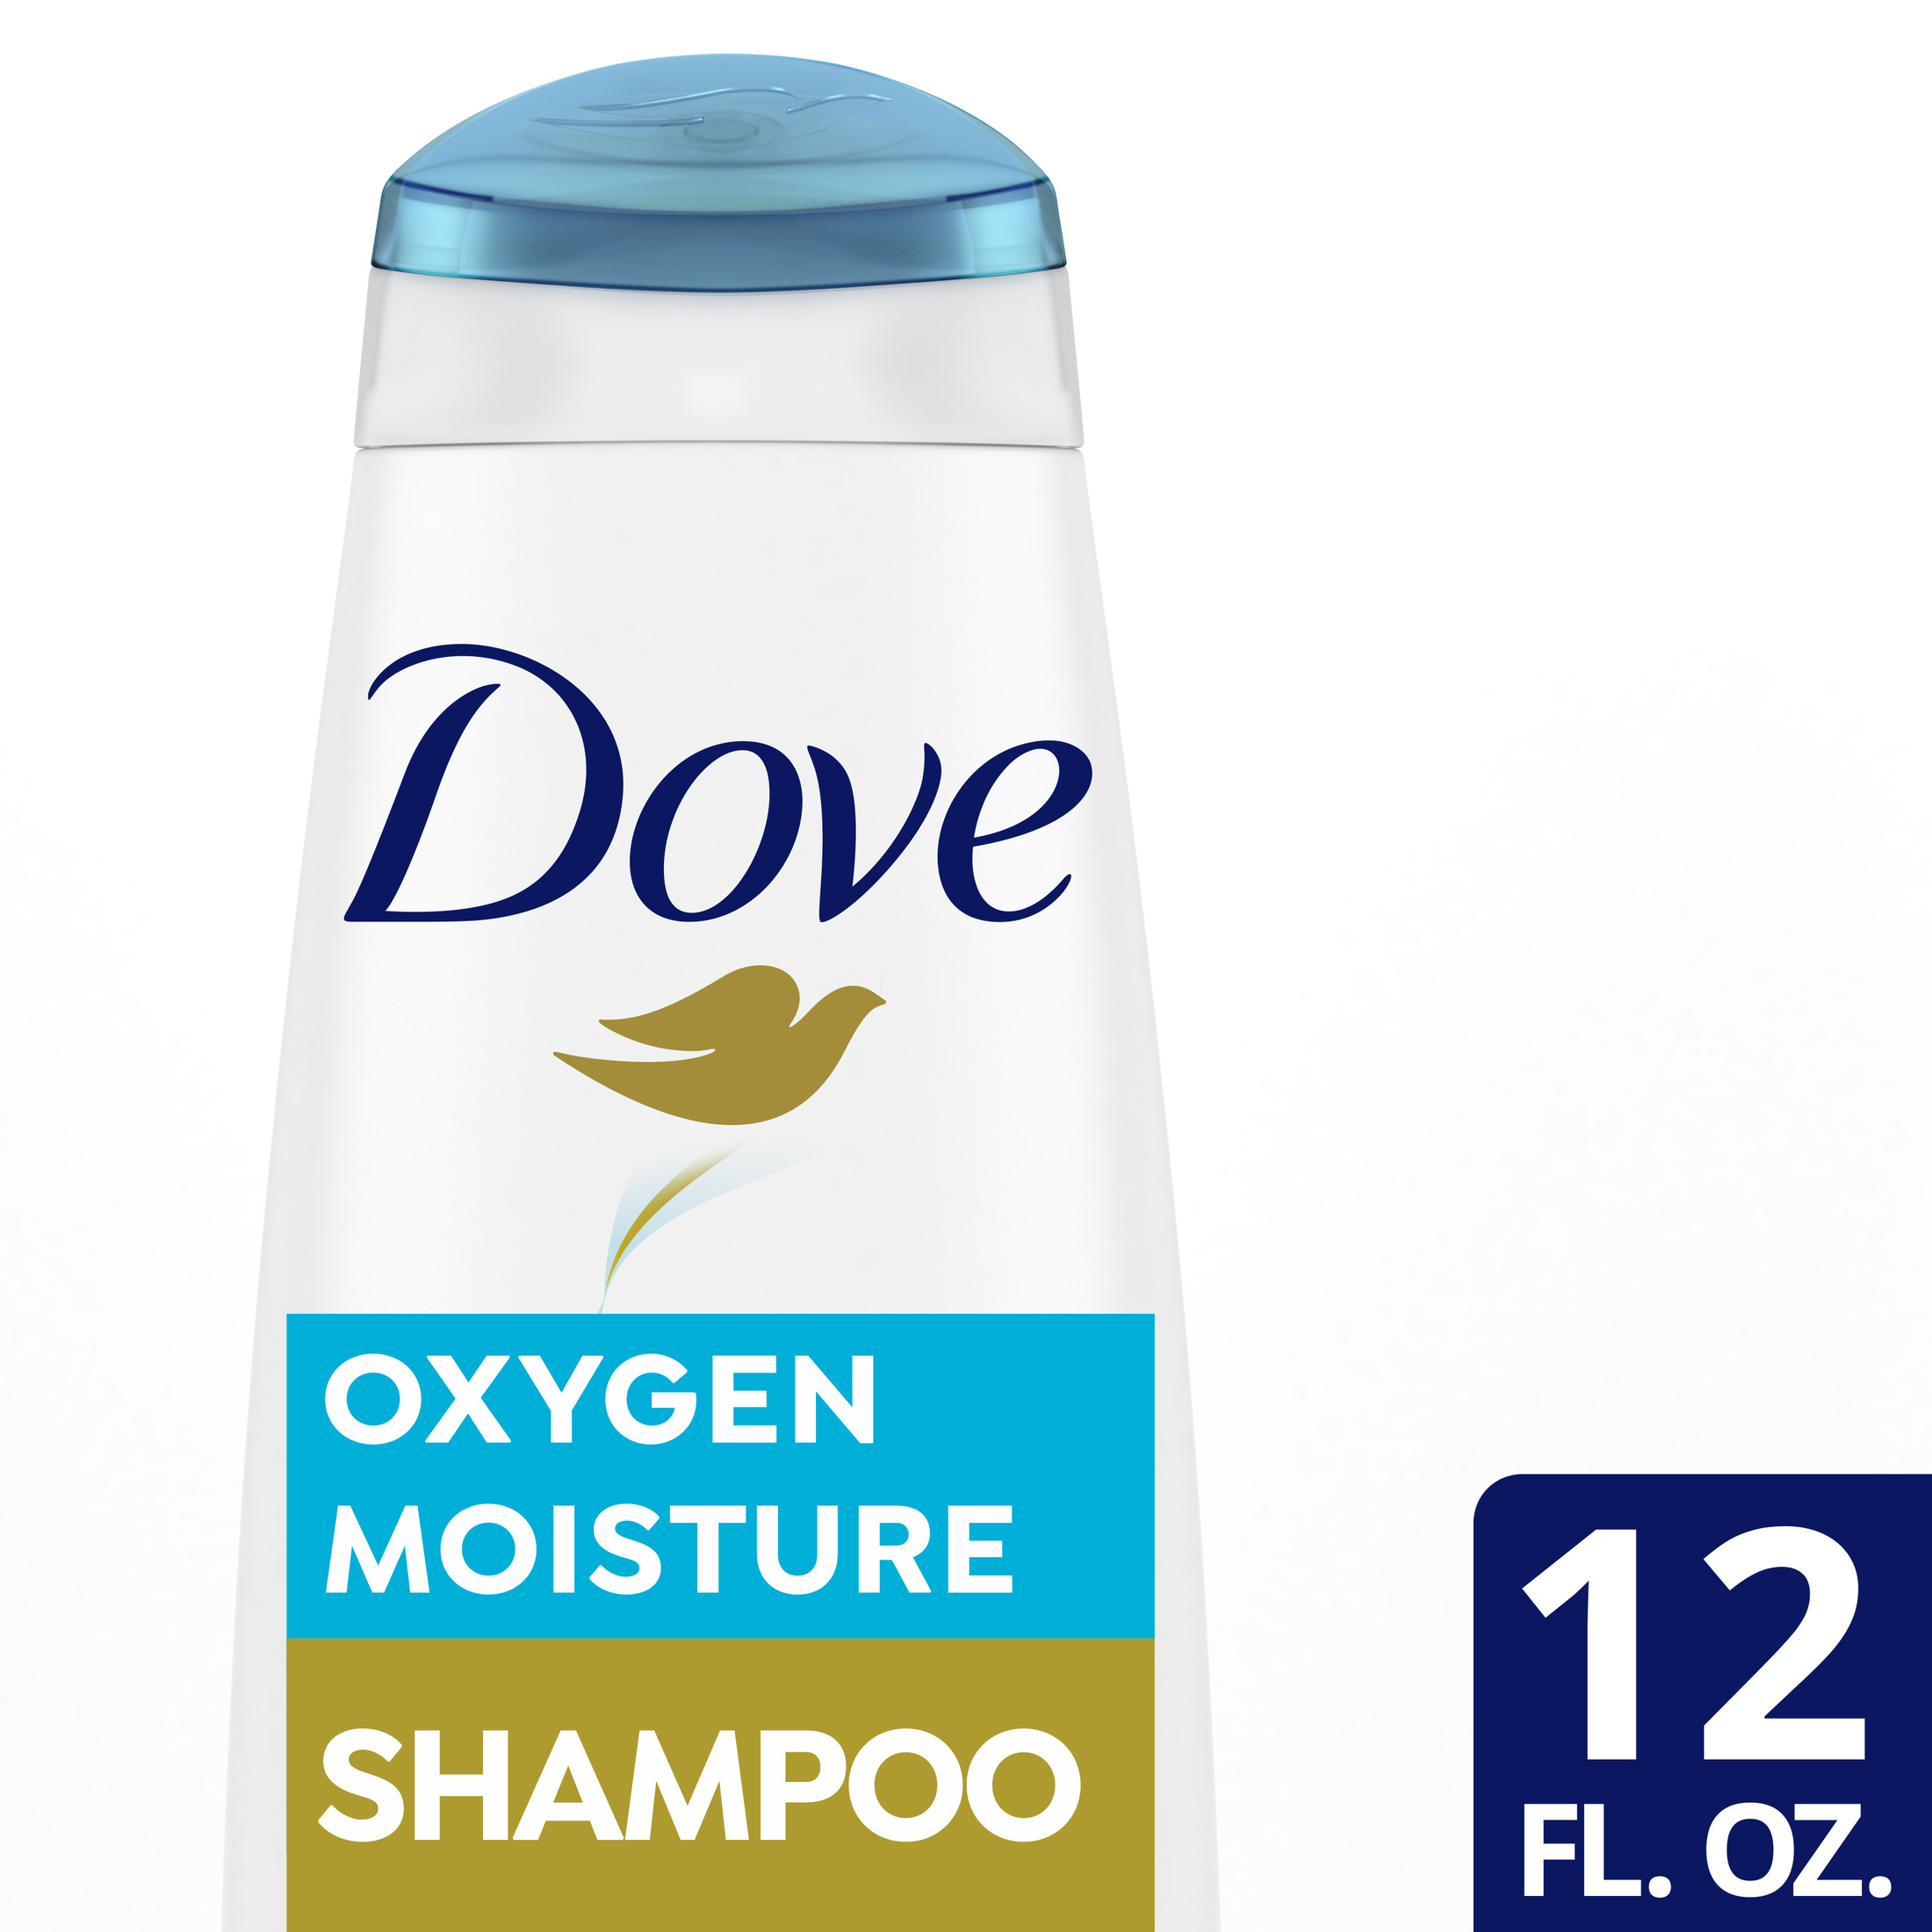 Dove Oxygen Moisture Shampoo, 12 oz - image 1 of 10